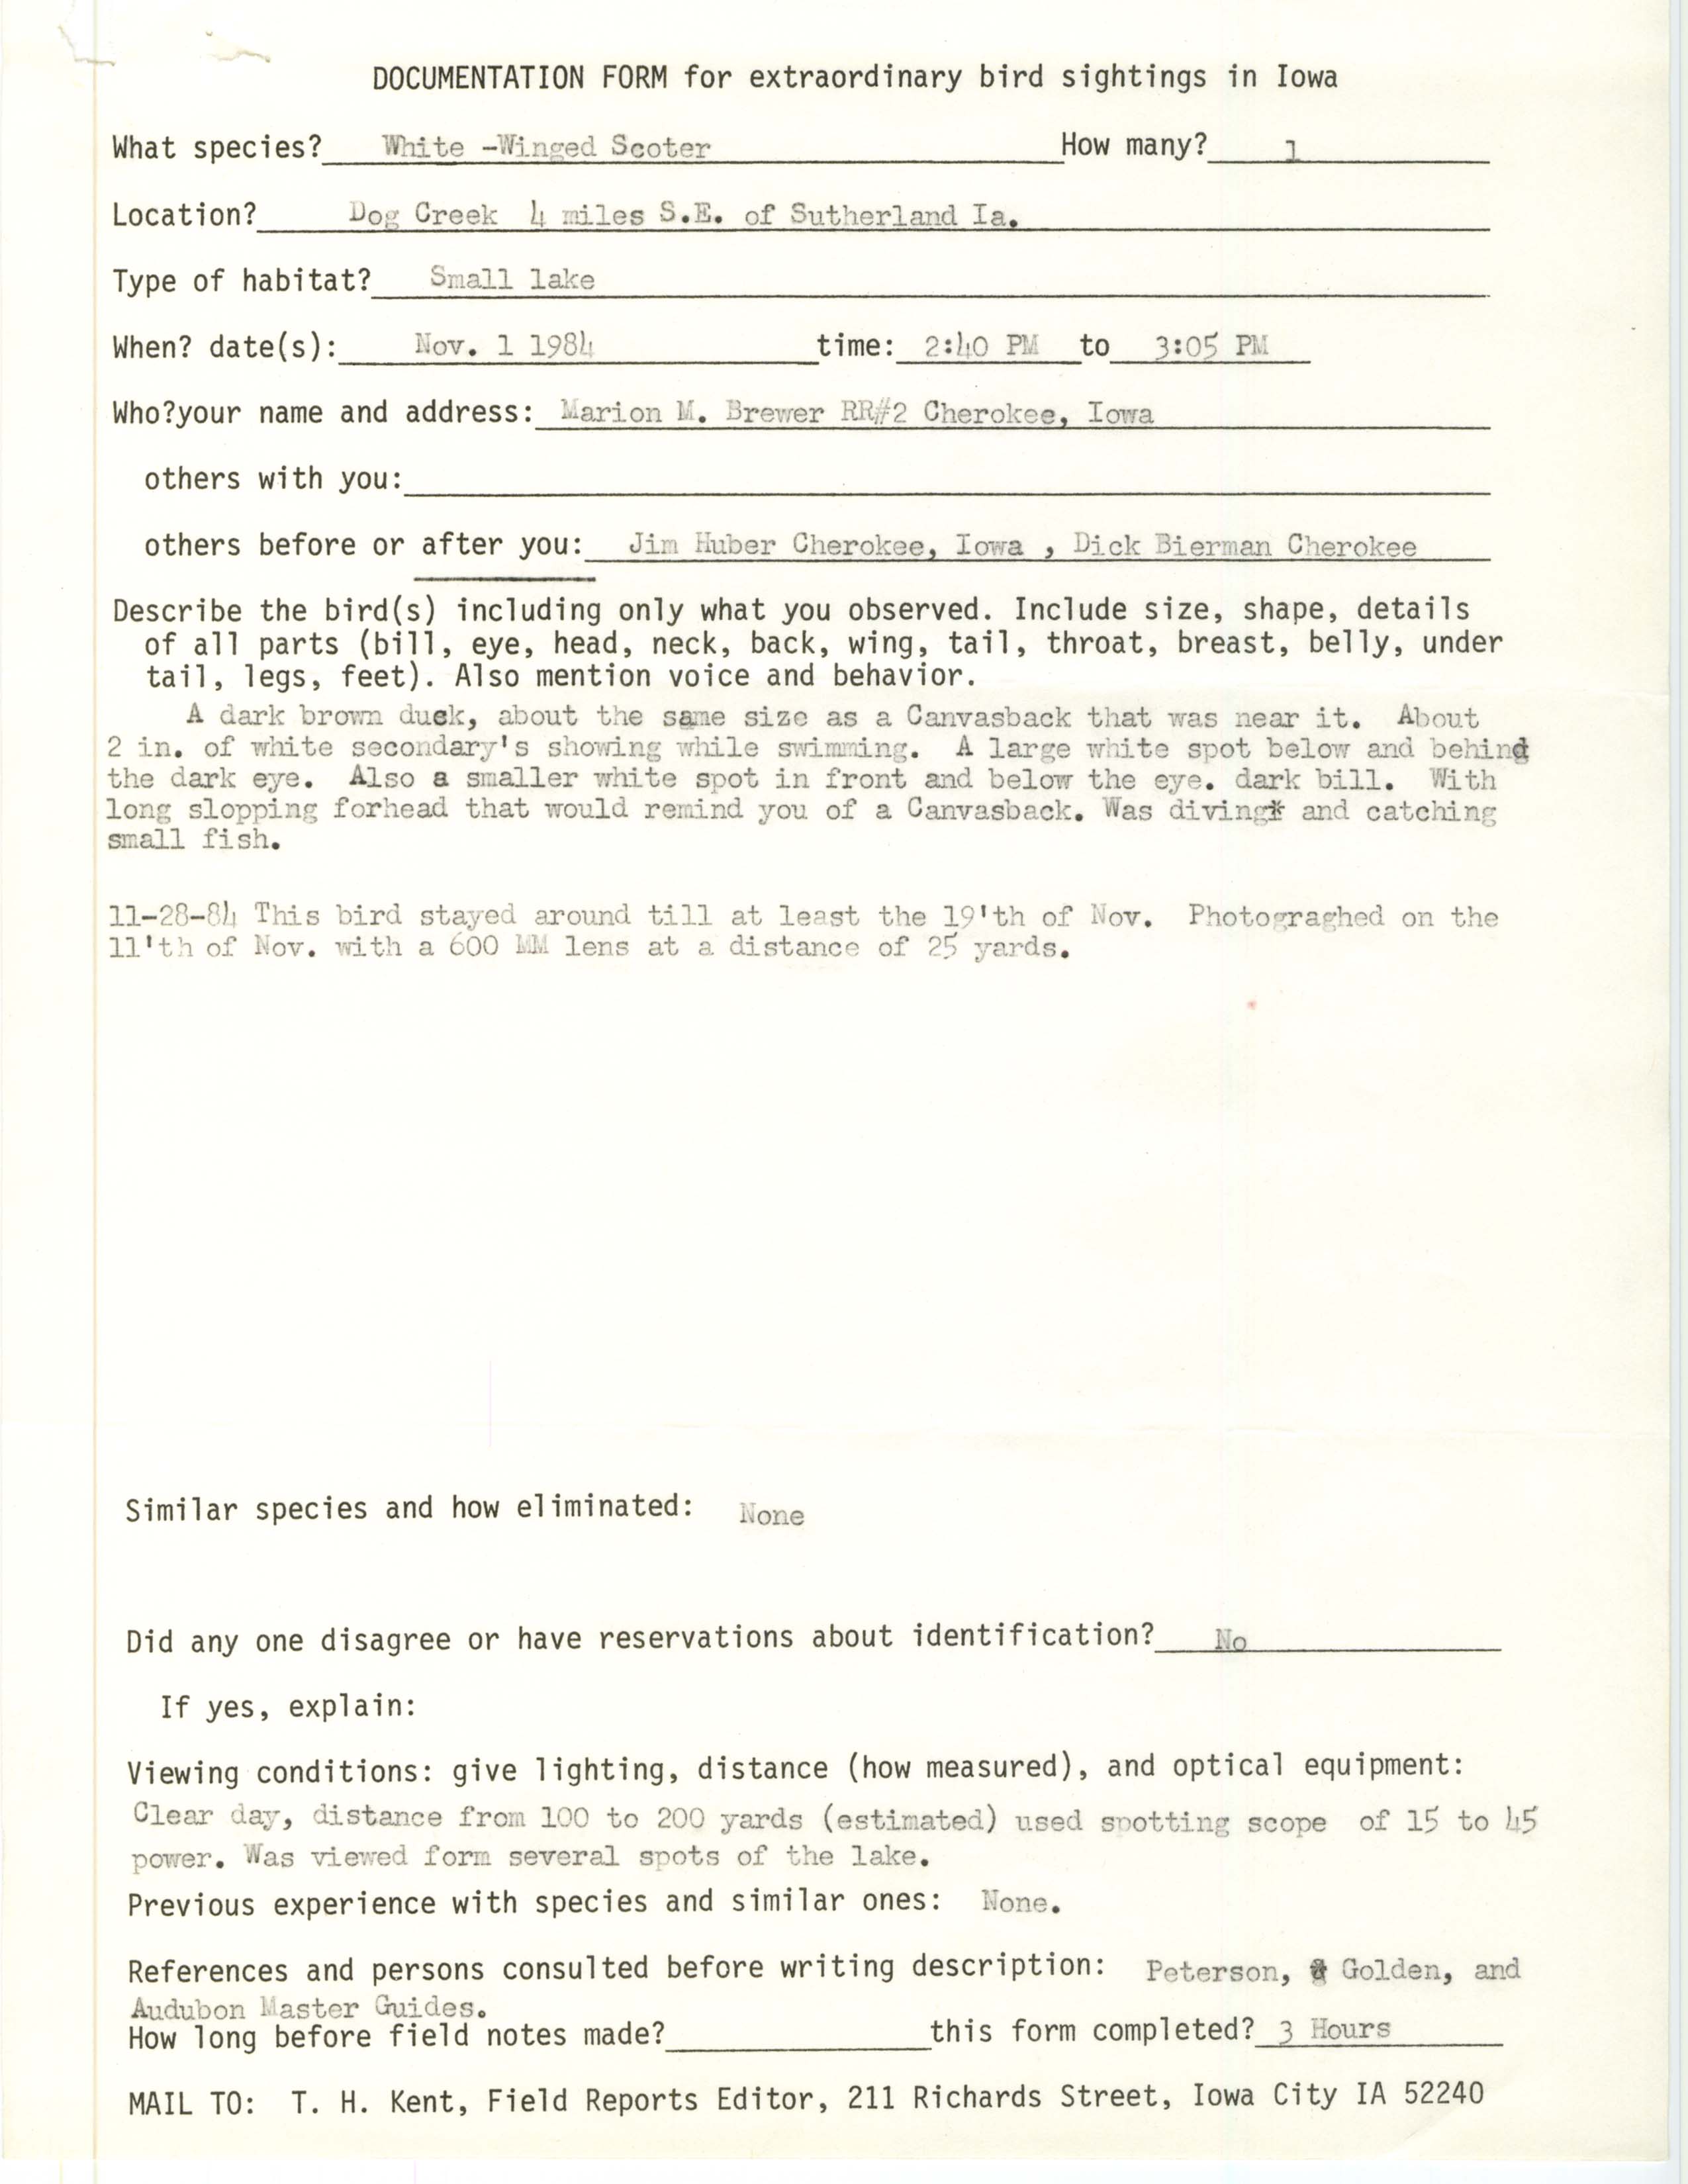 Rare bird documentation form for White-winged Scoter at Dog Creek, 1984